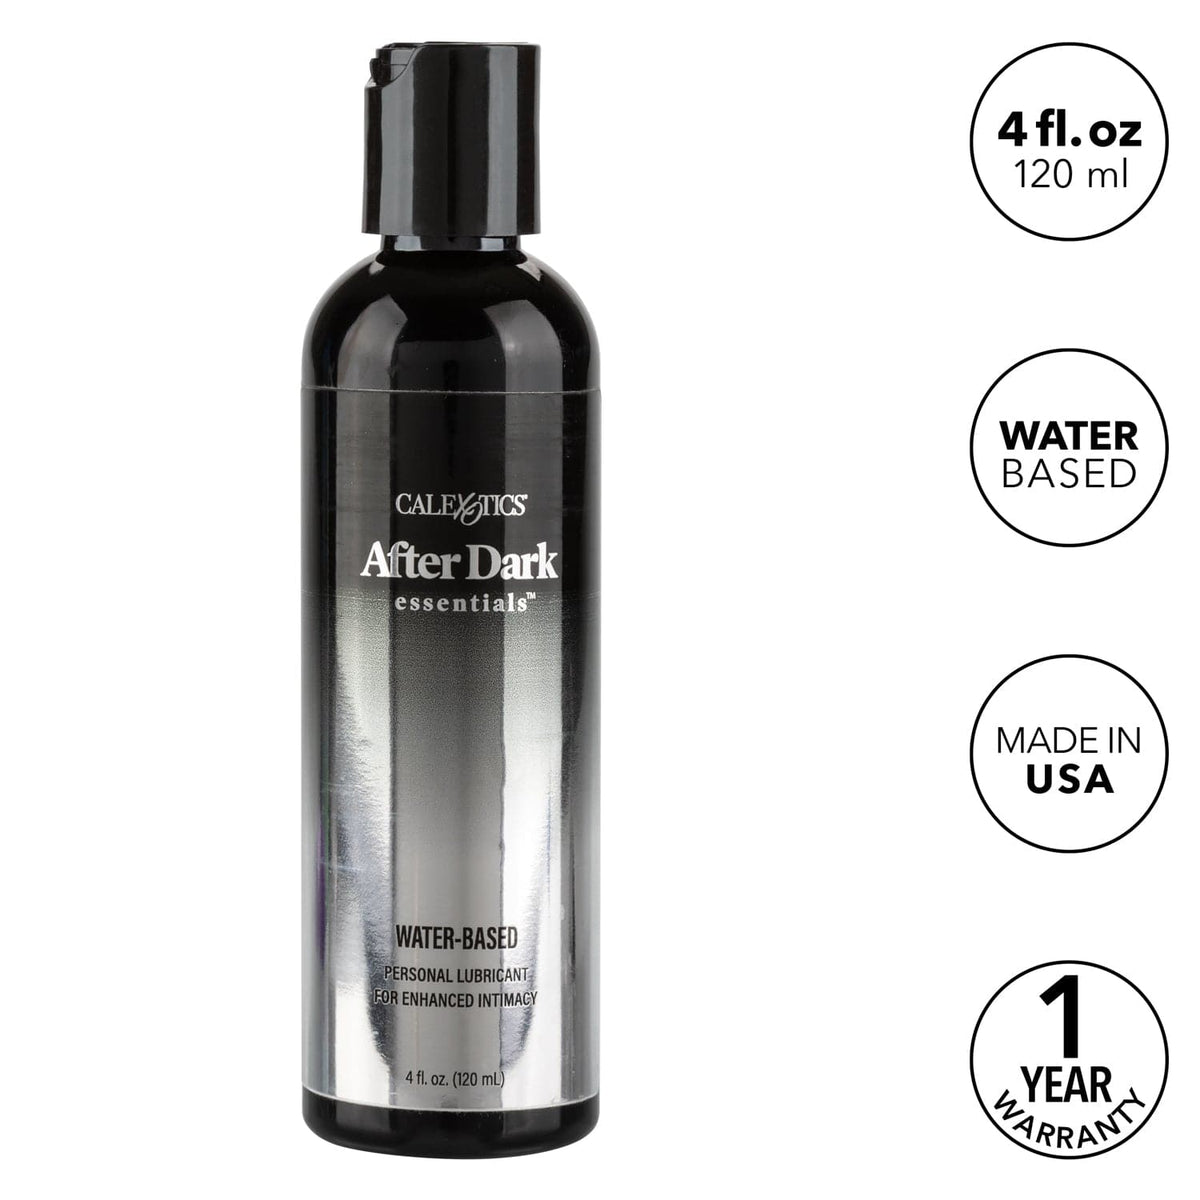 after dark essentials water based personal lubricant 4fl oz